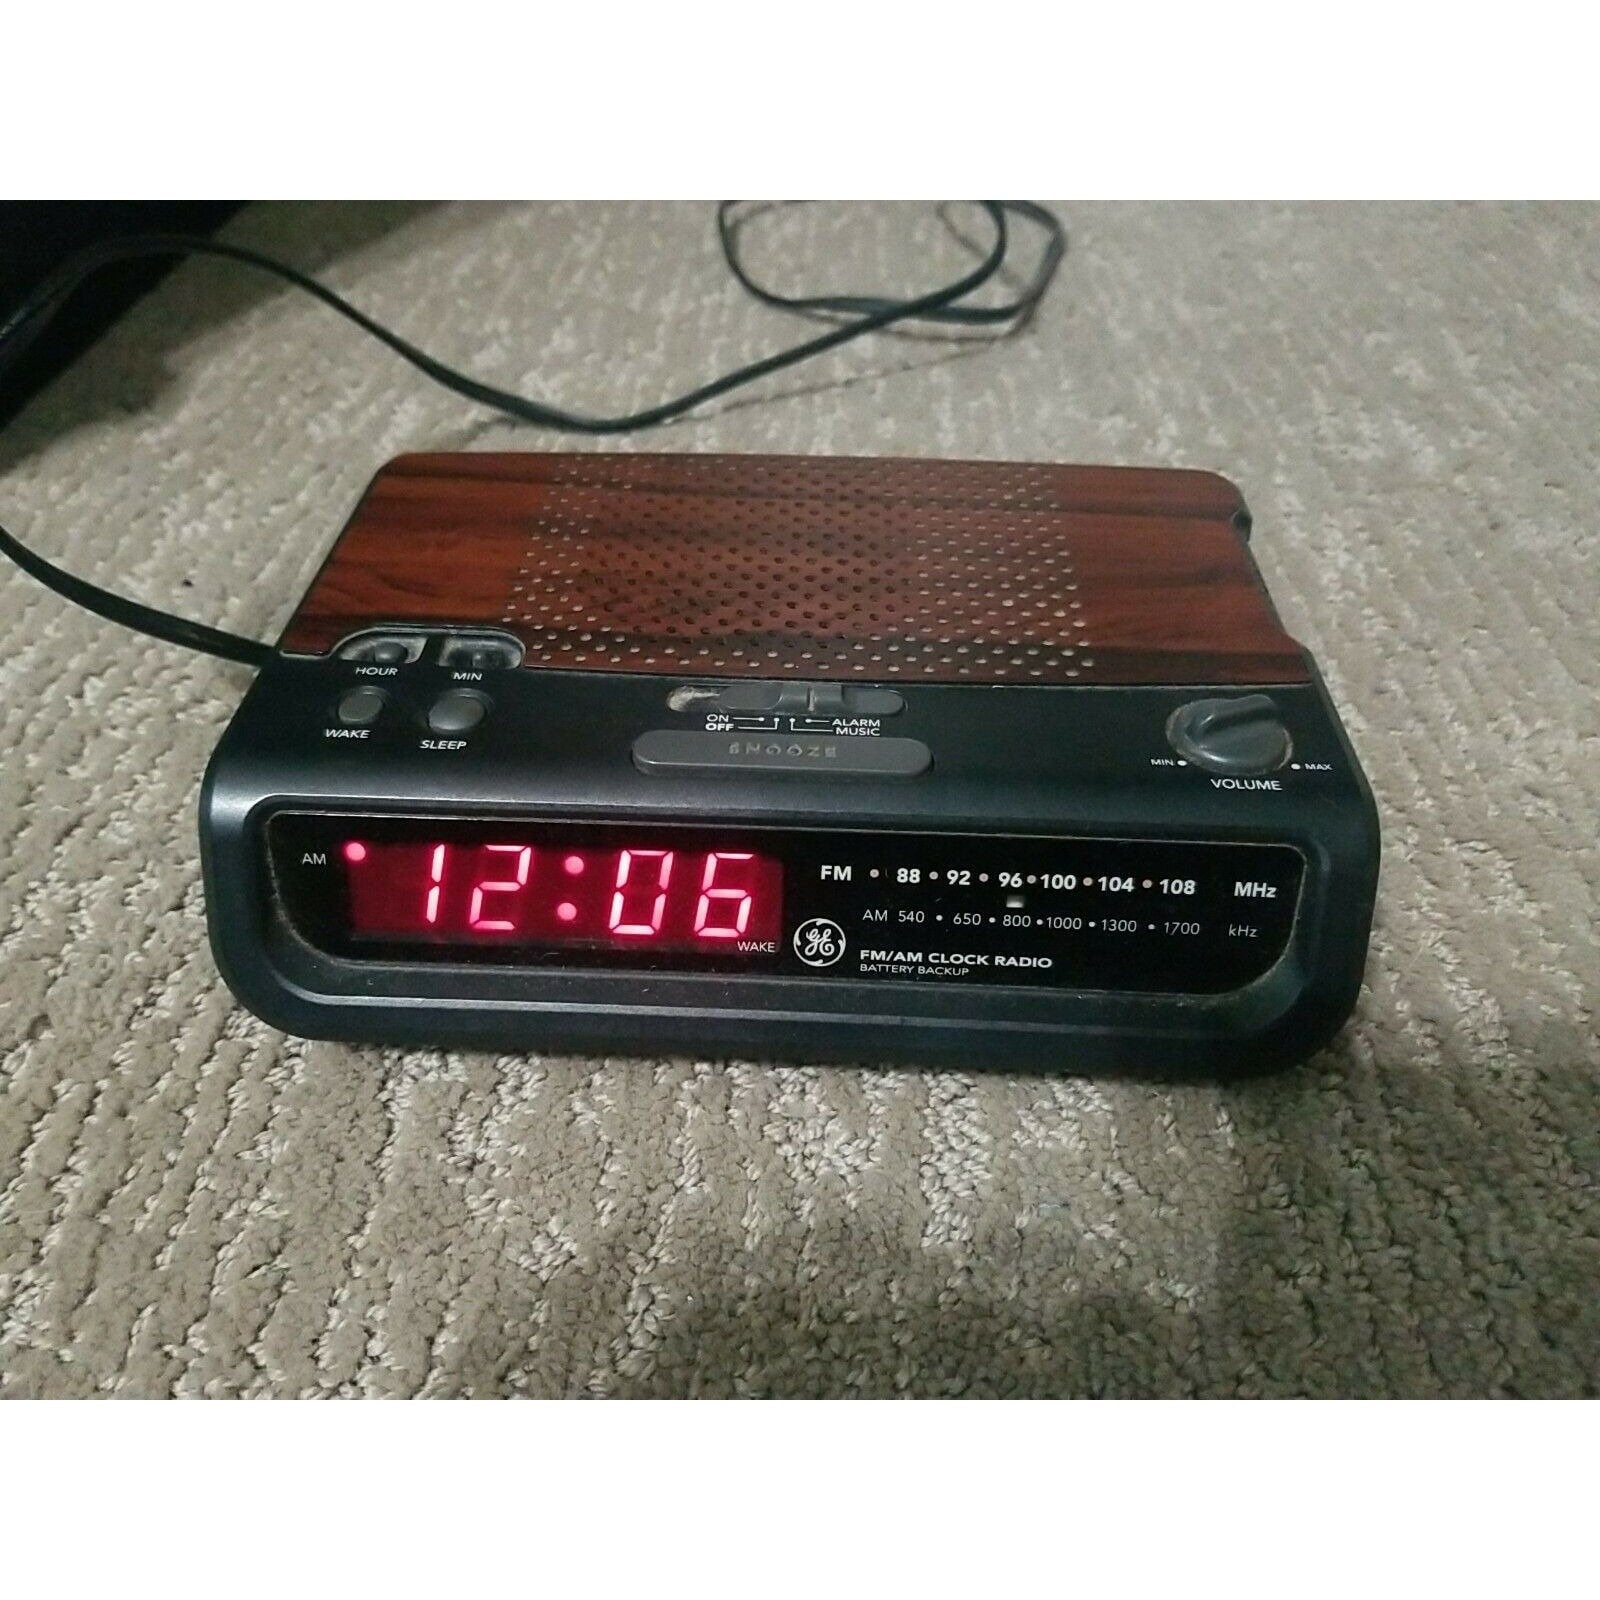 GE General Electric Digital Alarm Clock Radio - Woodgrain Model 7-4613A